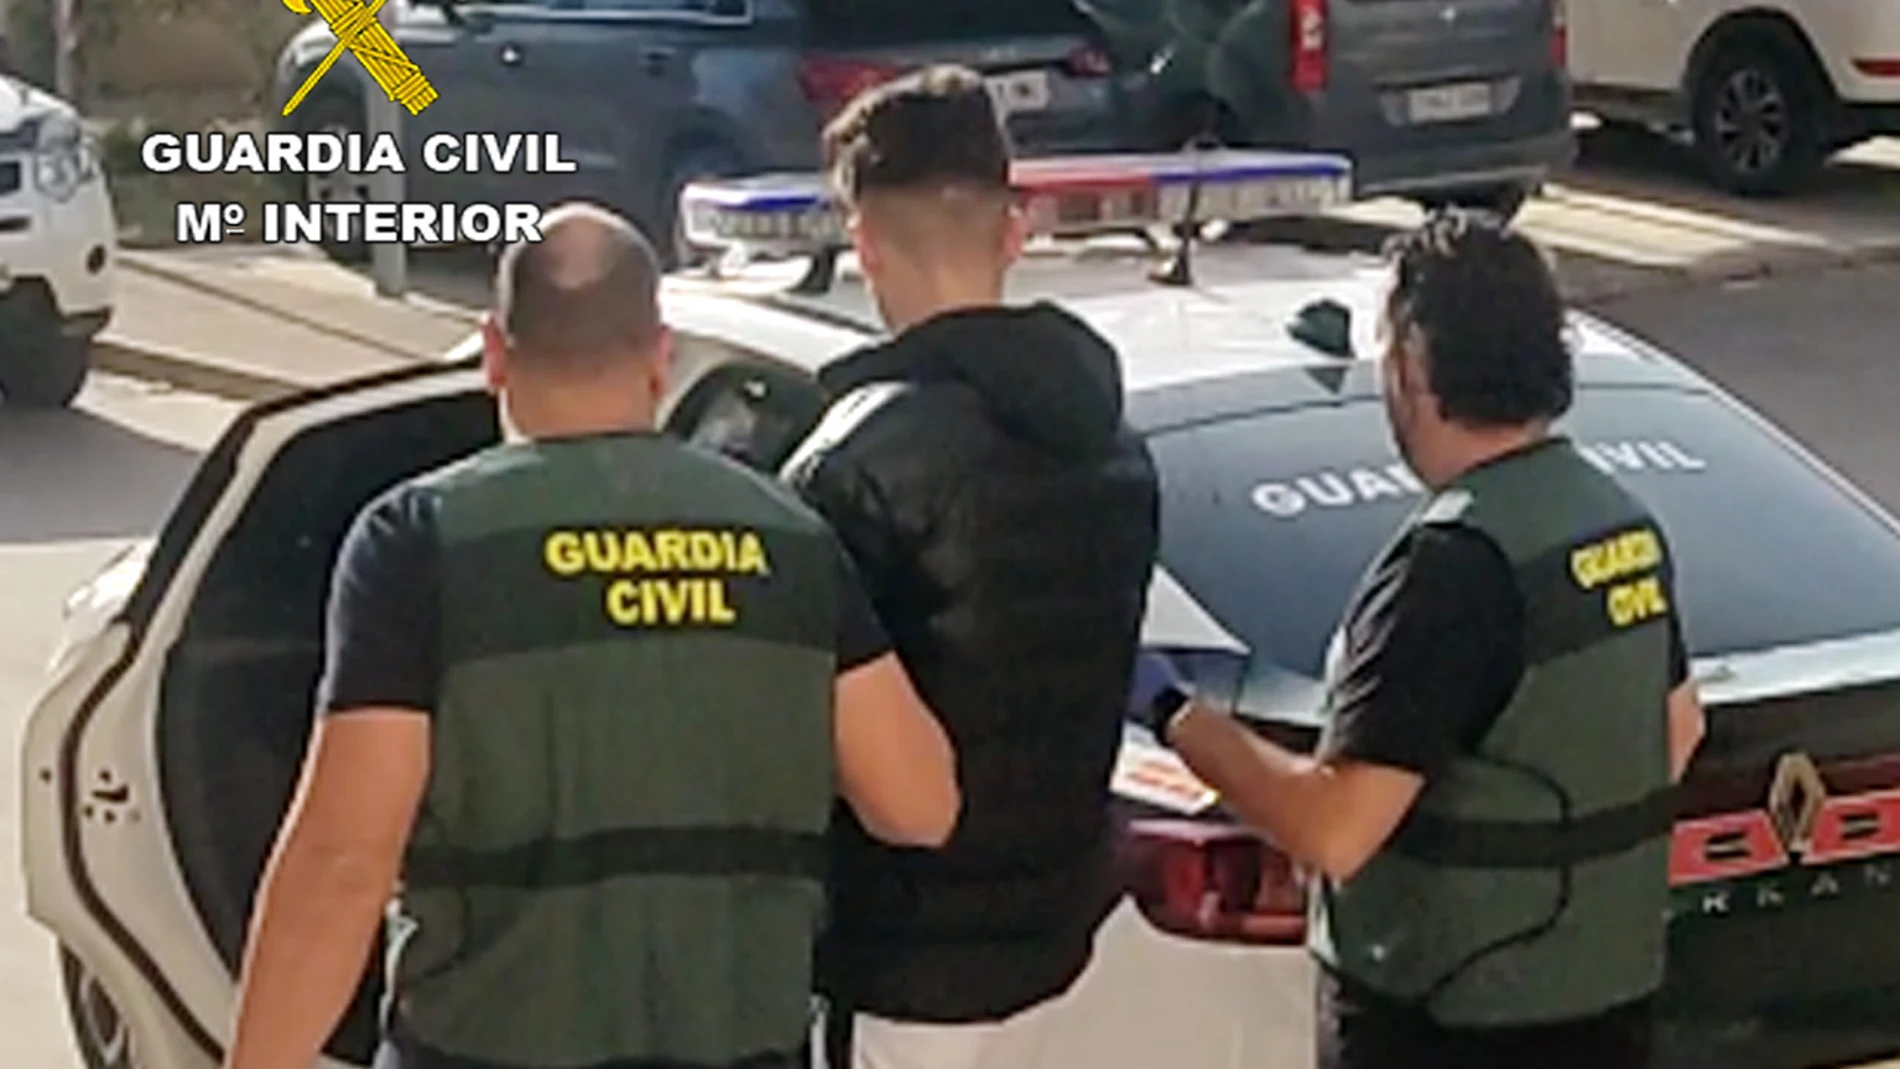 El arrestado junto a dos agentes de la Guardia Civil